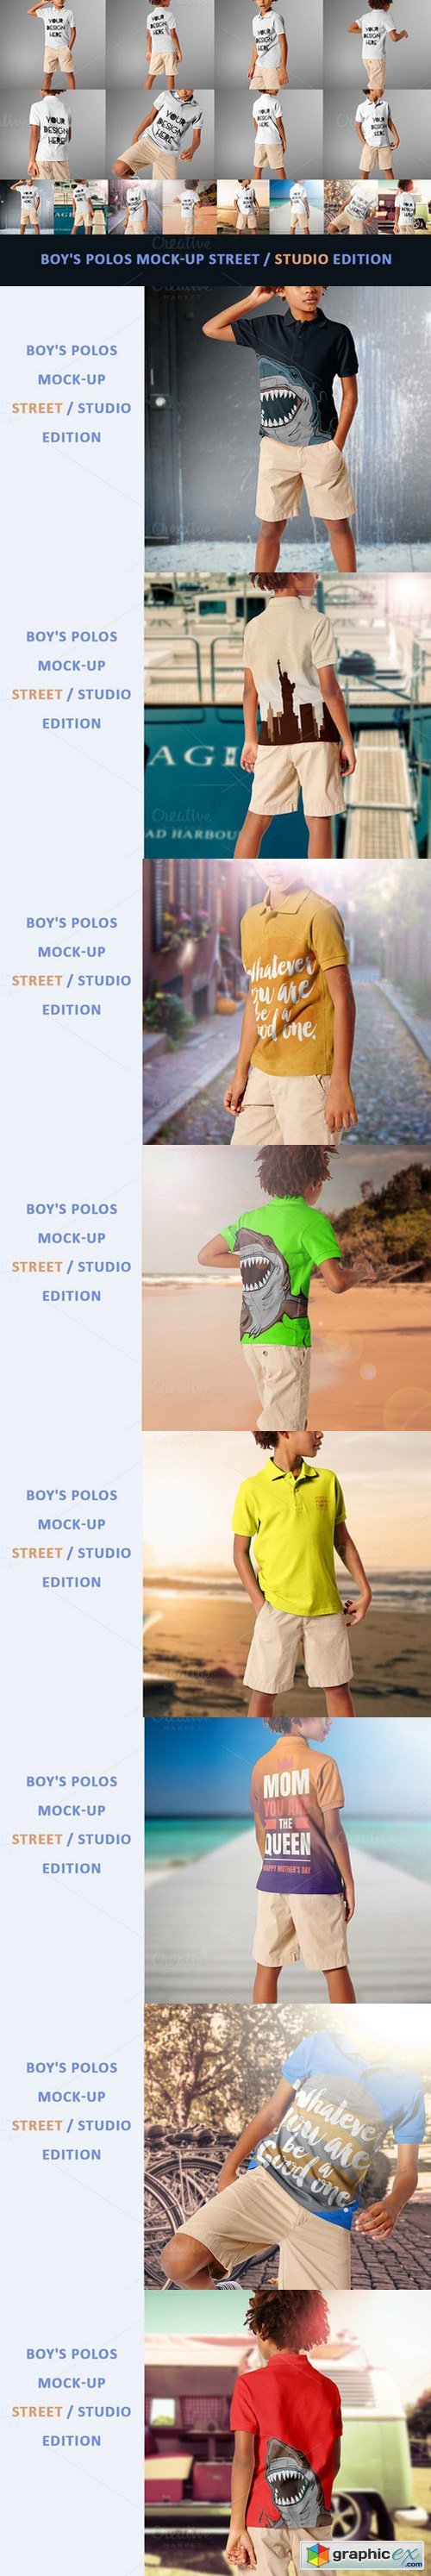 Boy's Polos Mock-up Street / studio